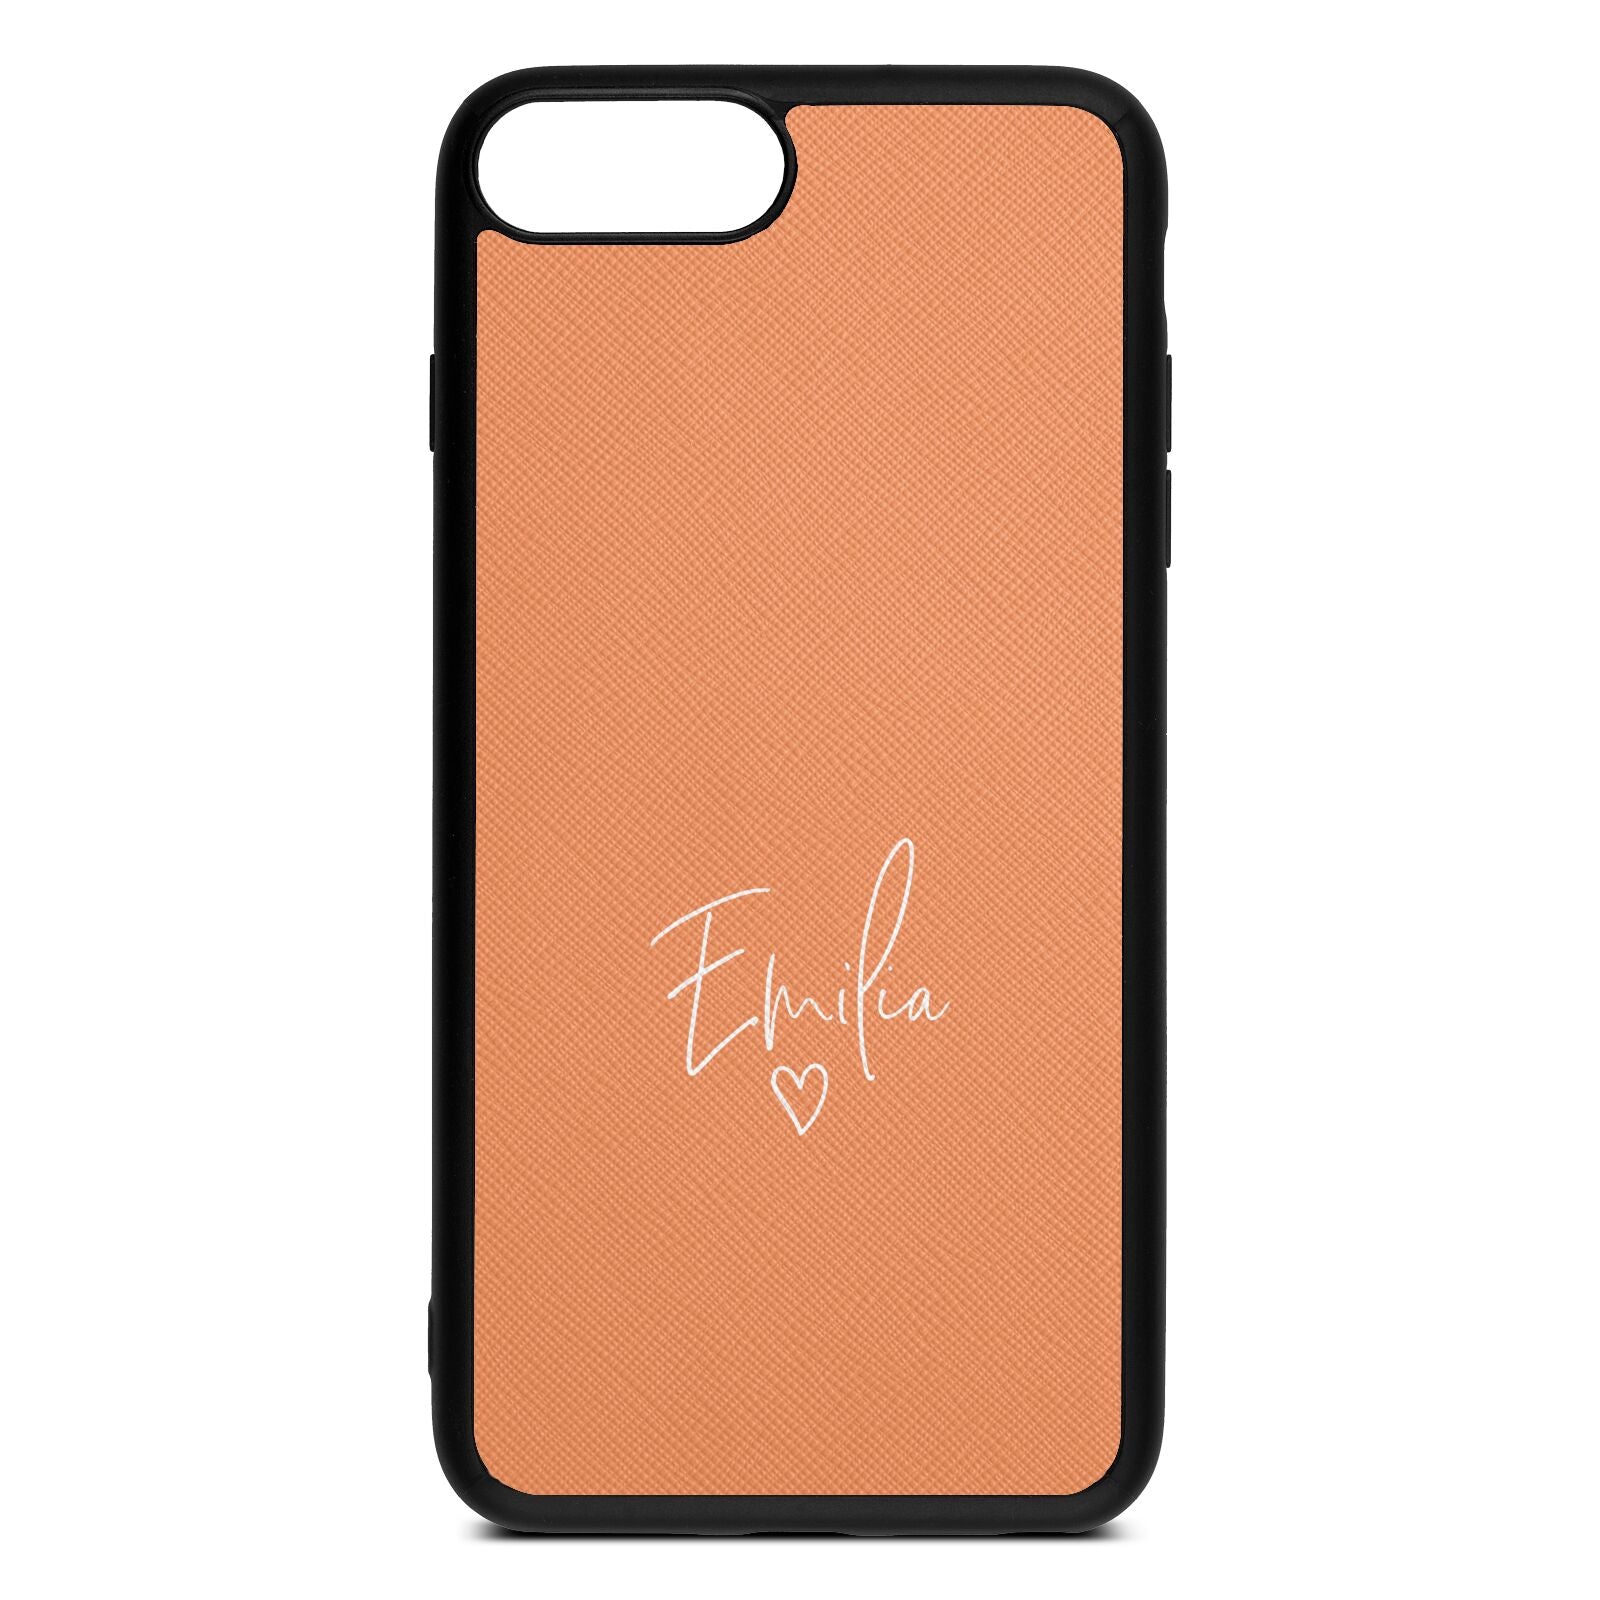 White Handwritten Name Transparent Orange Saffiano Leather iPhone 8 Plus Case